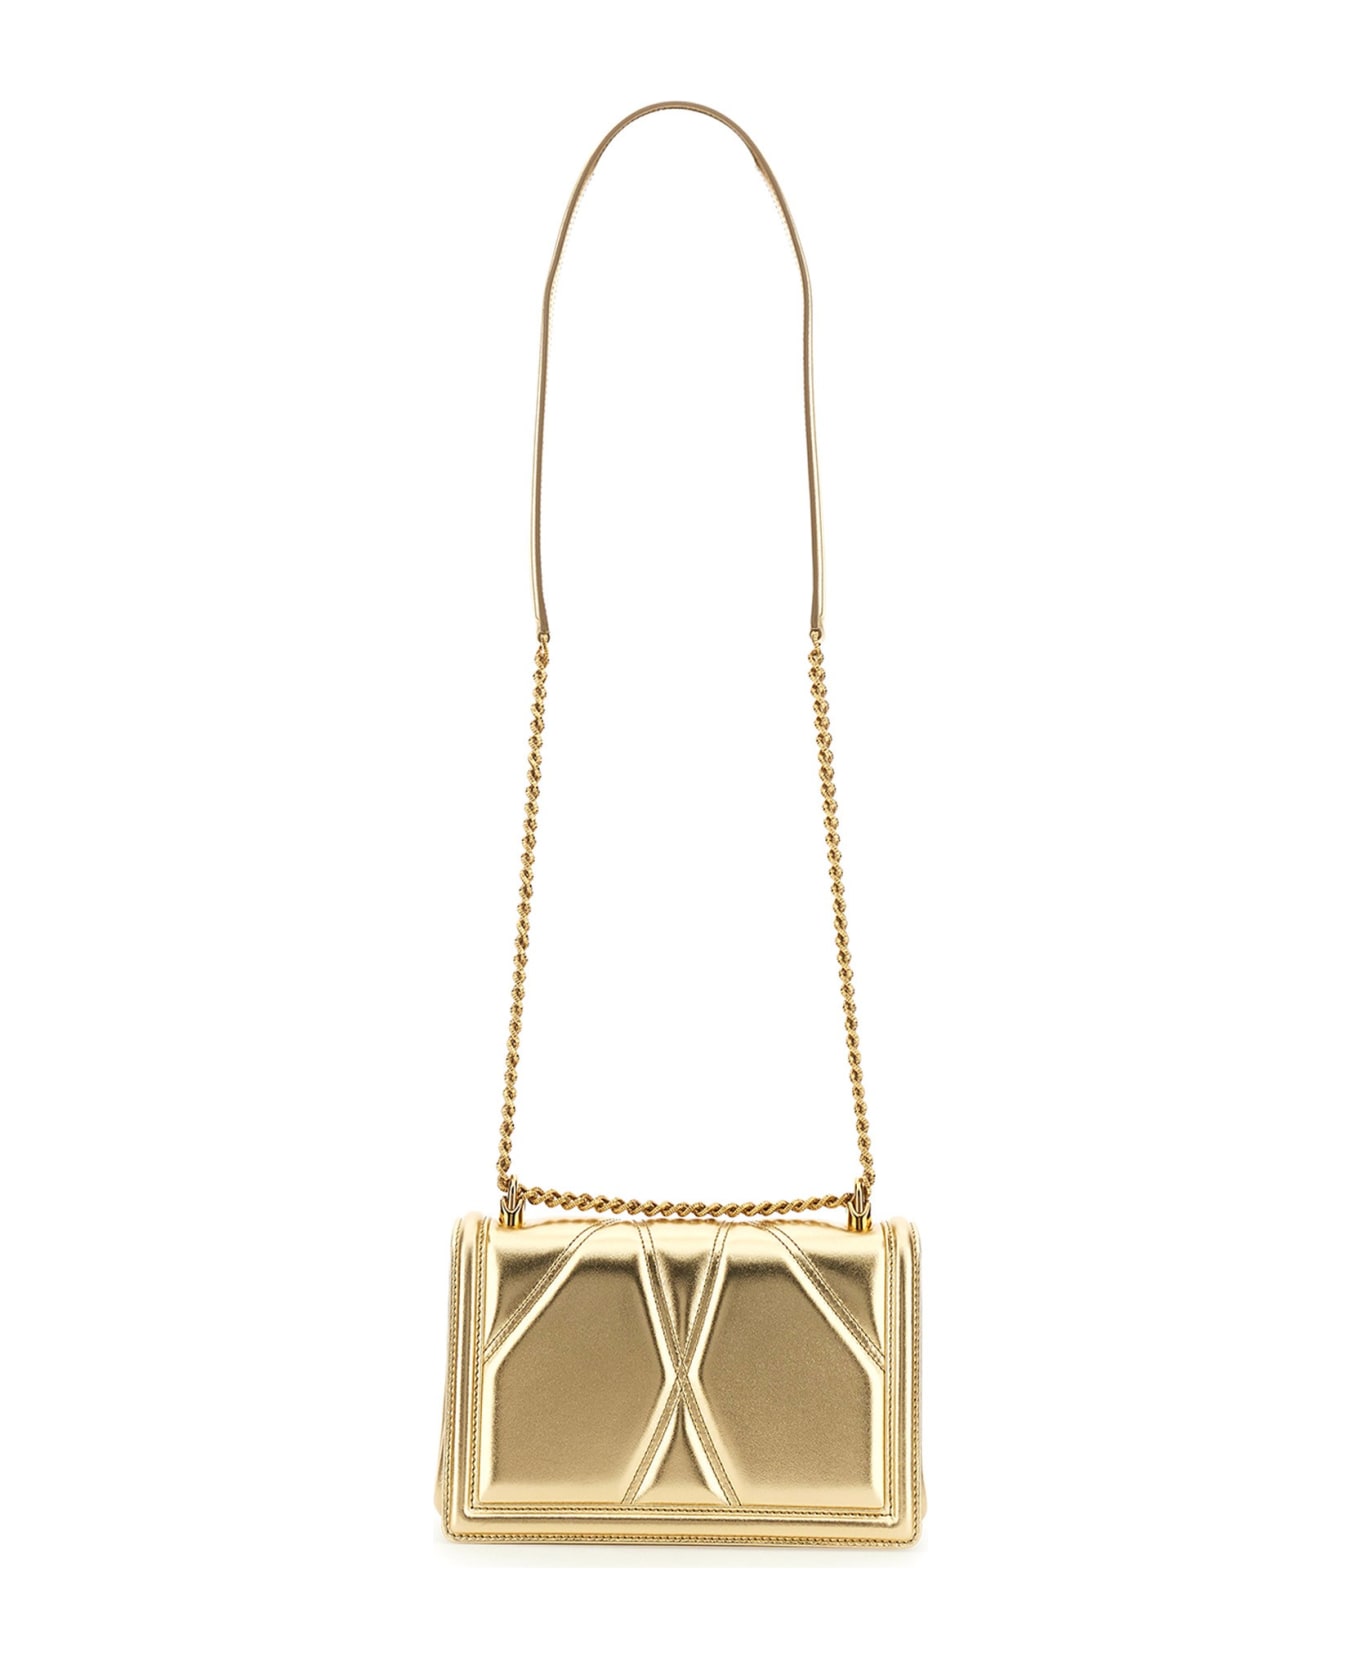 Dolce & Gabbana Devotion Quilted Shoulder Bag - ORO